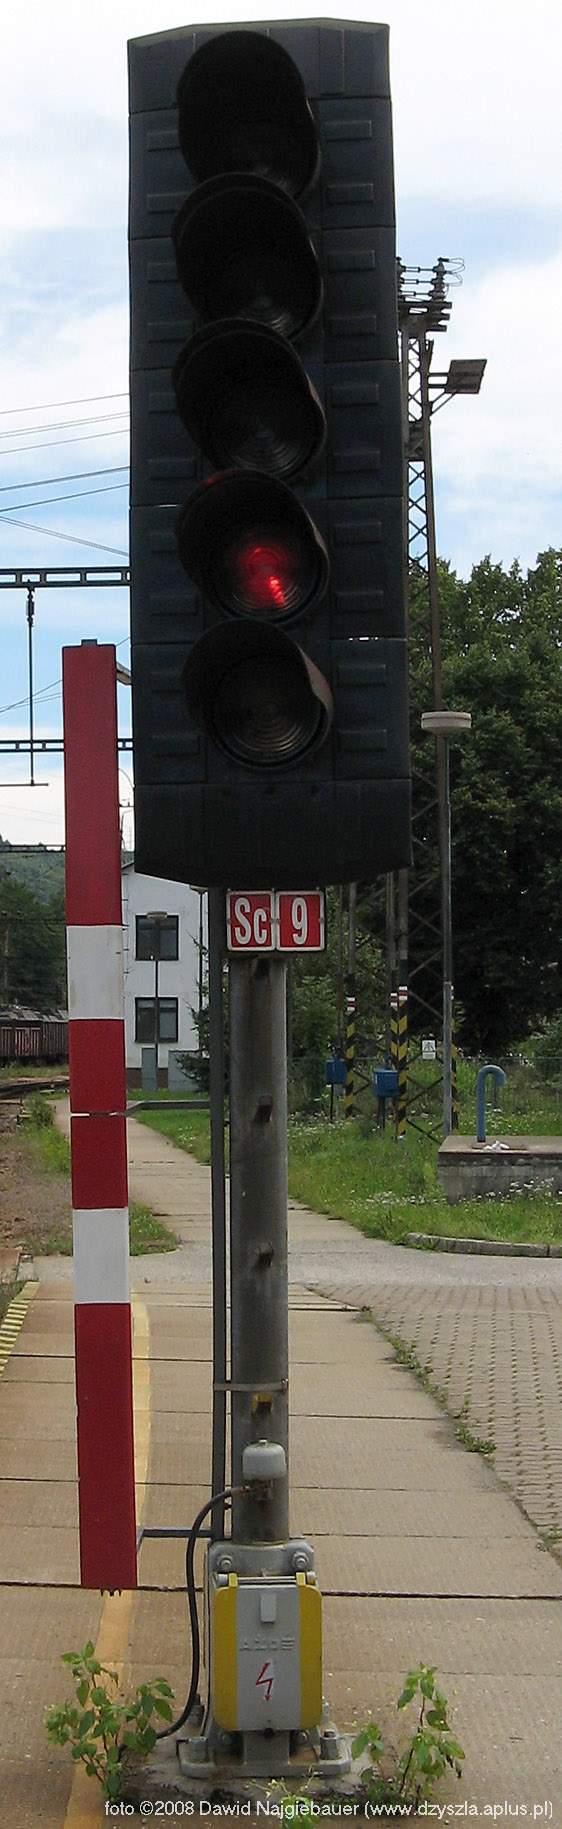 Słowacki semafor